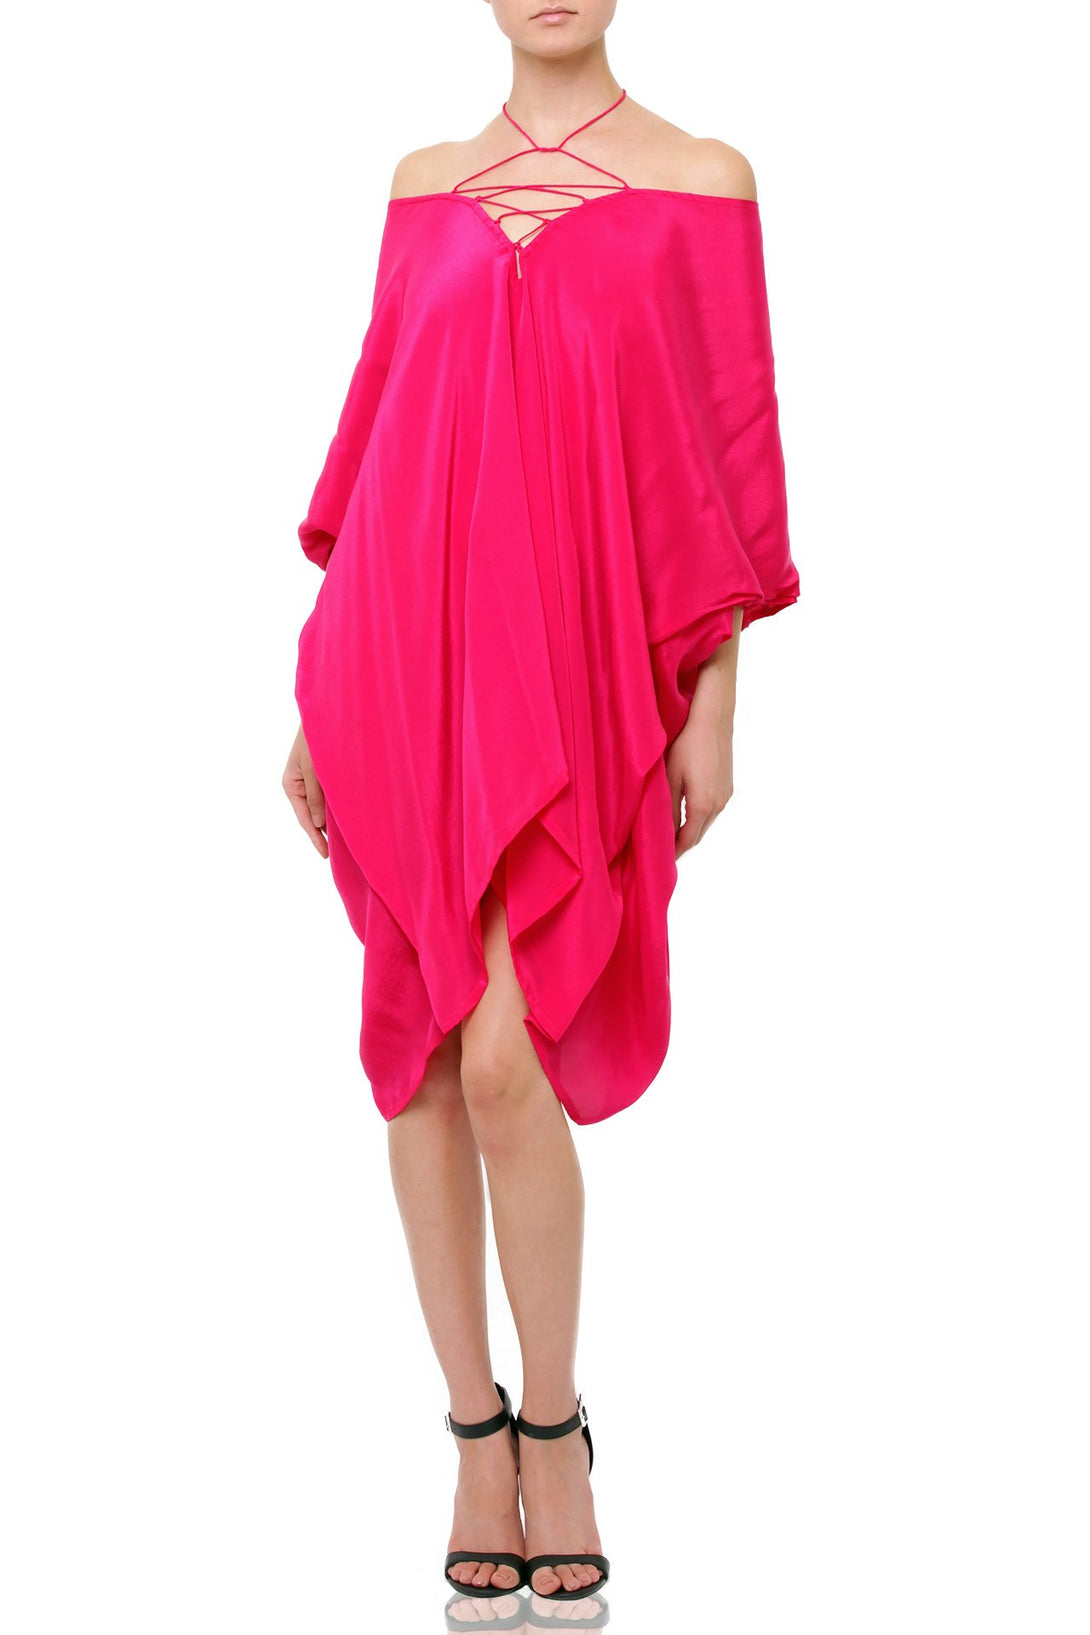 hot pink short dress, Shahida Parides, silk caftans,short sleeveless summer dresses, cute mini dresses,